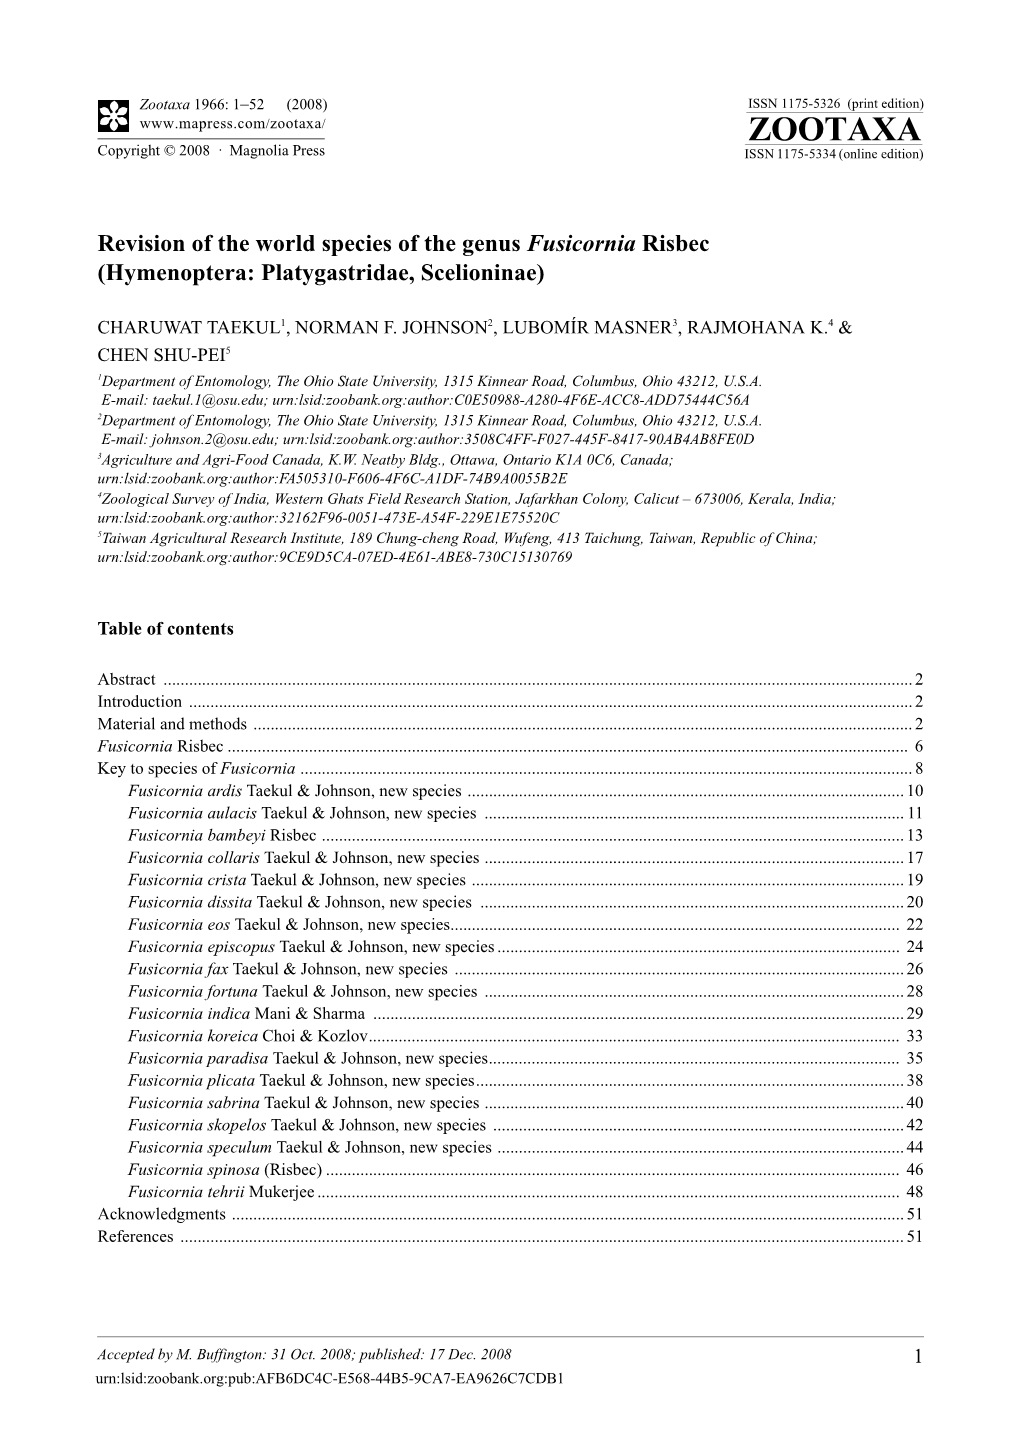 Zootaxa, Revision of the World Species of the Genus Fusicornia Risbec